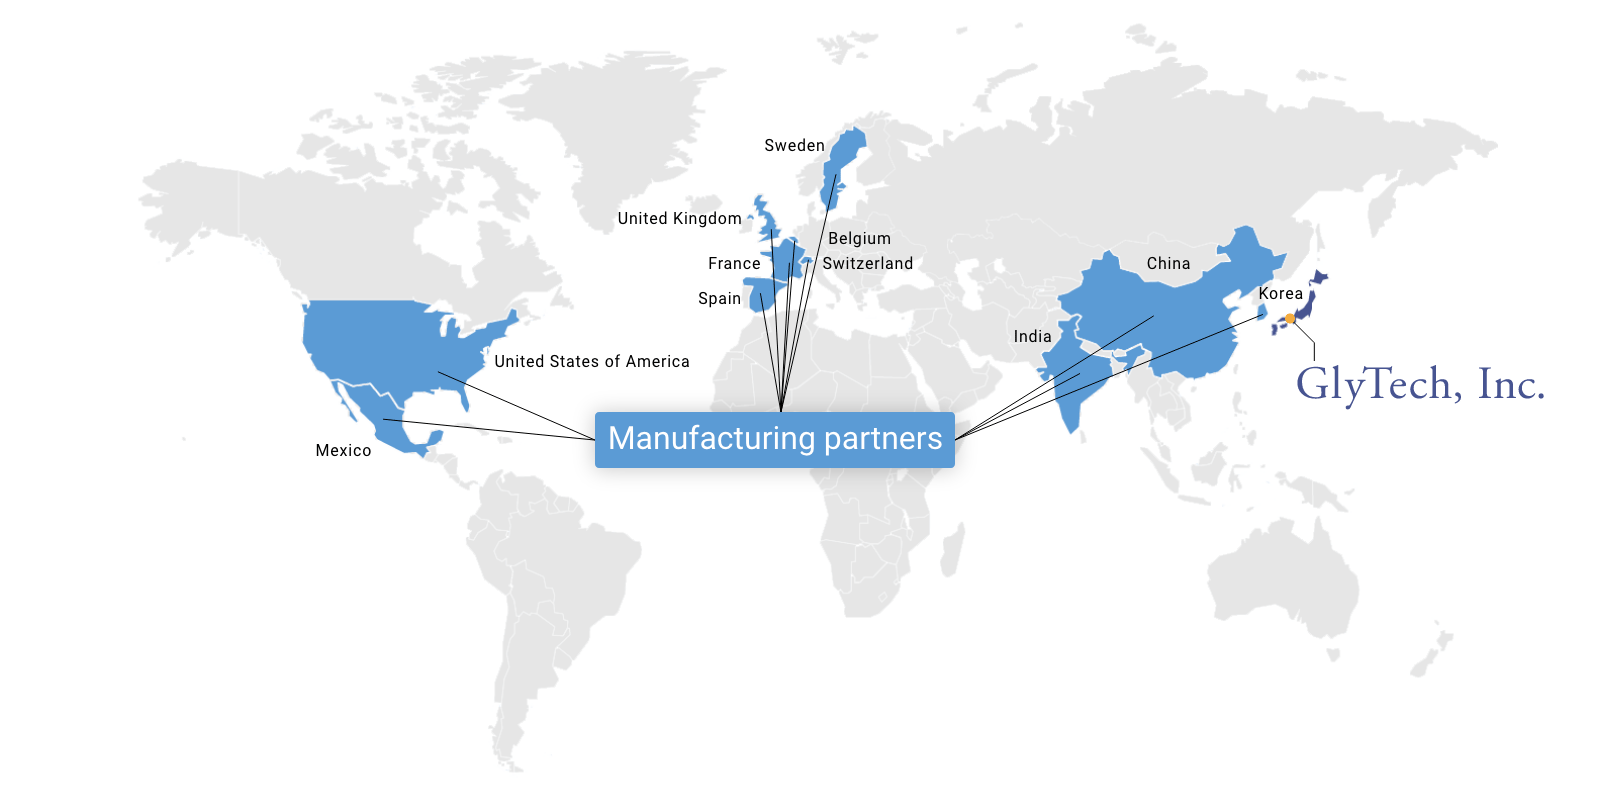 Map of manufacturing partners around the world. China, Korea, India, United States of America, Mexico, United Kingdom, France, Spain, Sweden, Belgium and Switzerland.